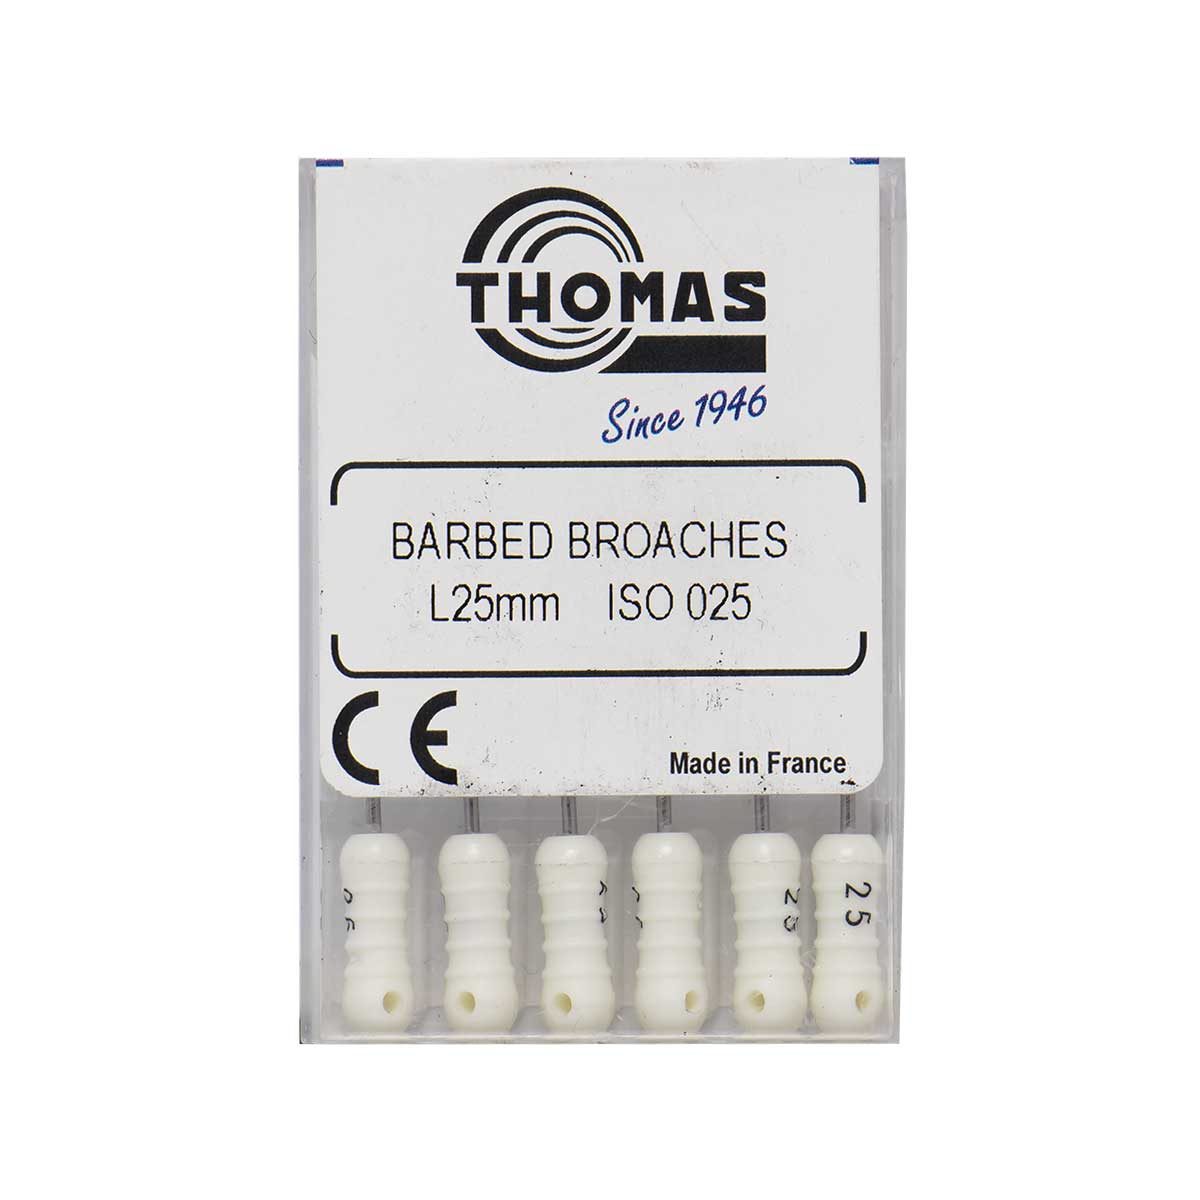 باربروچ – THOMAS – Nerve (Barbed) Broaches